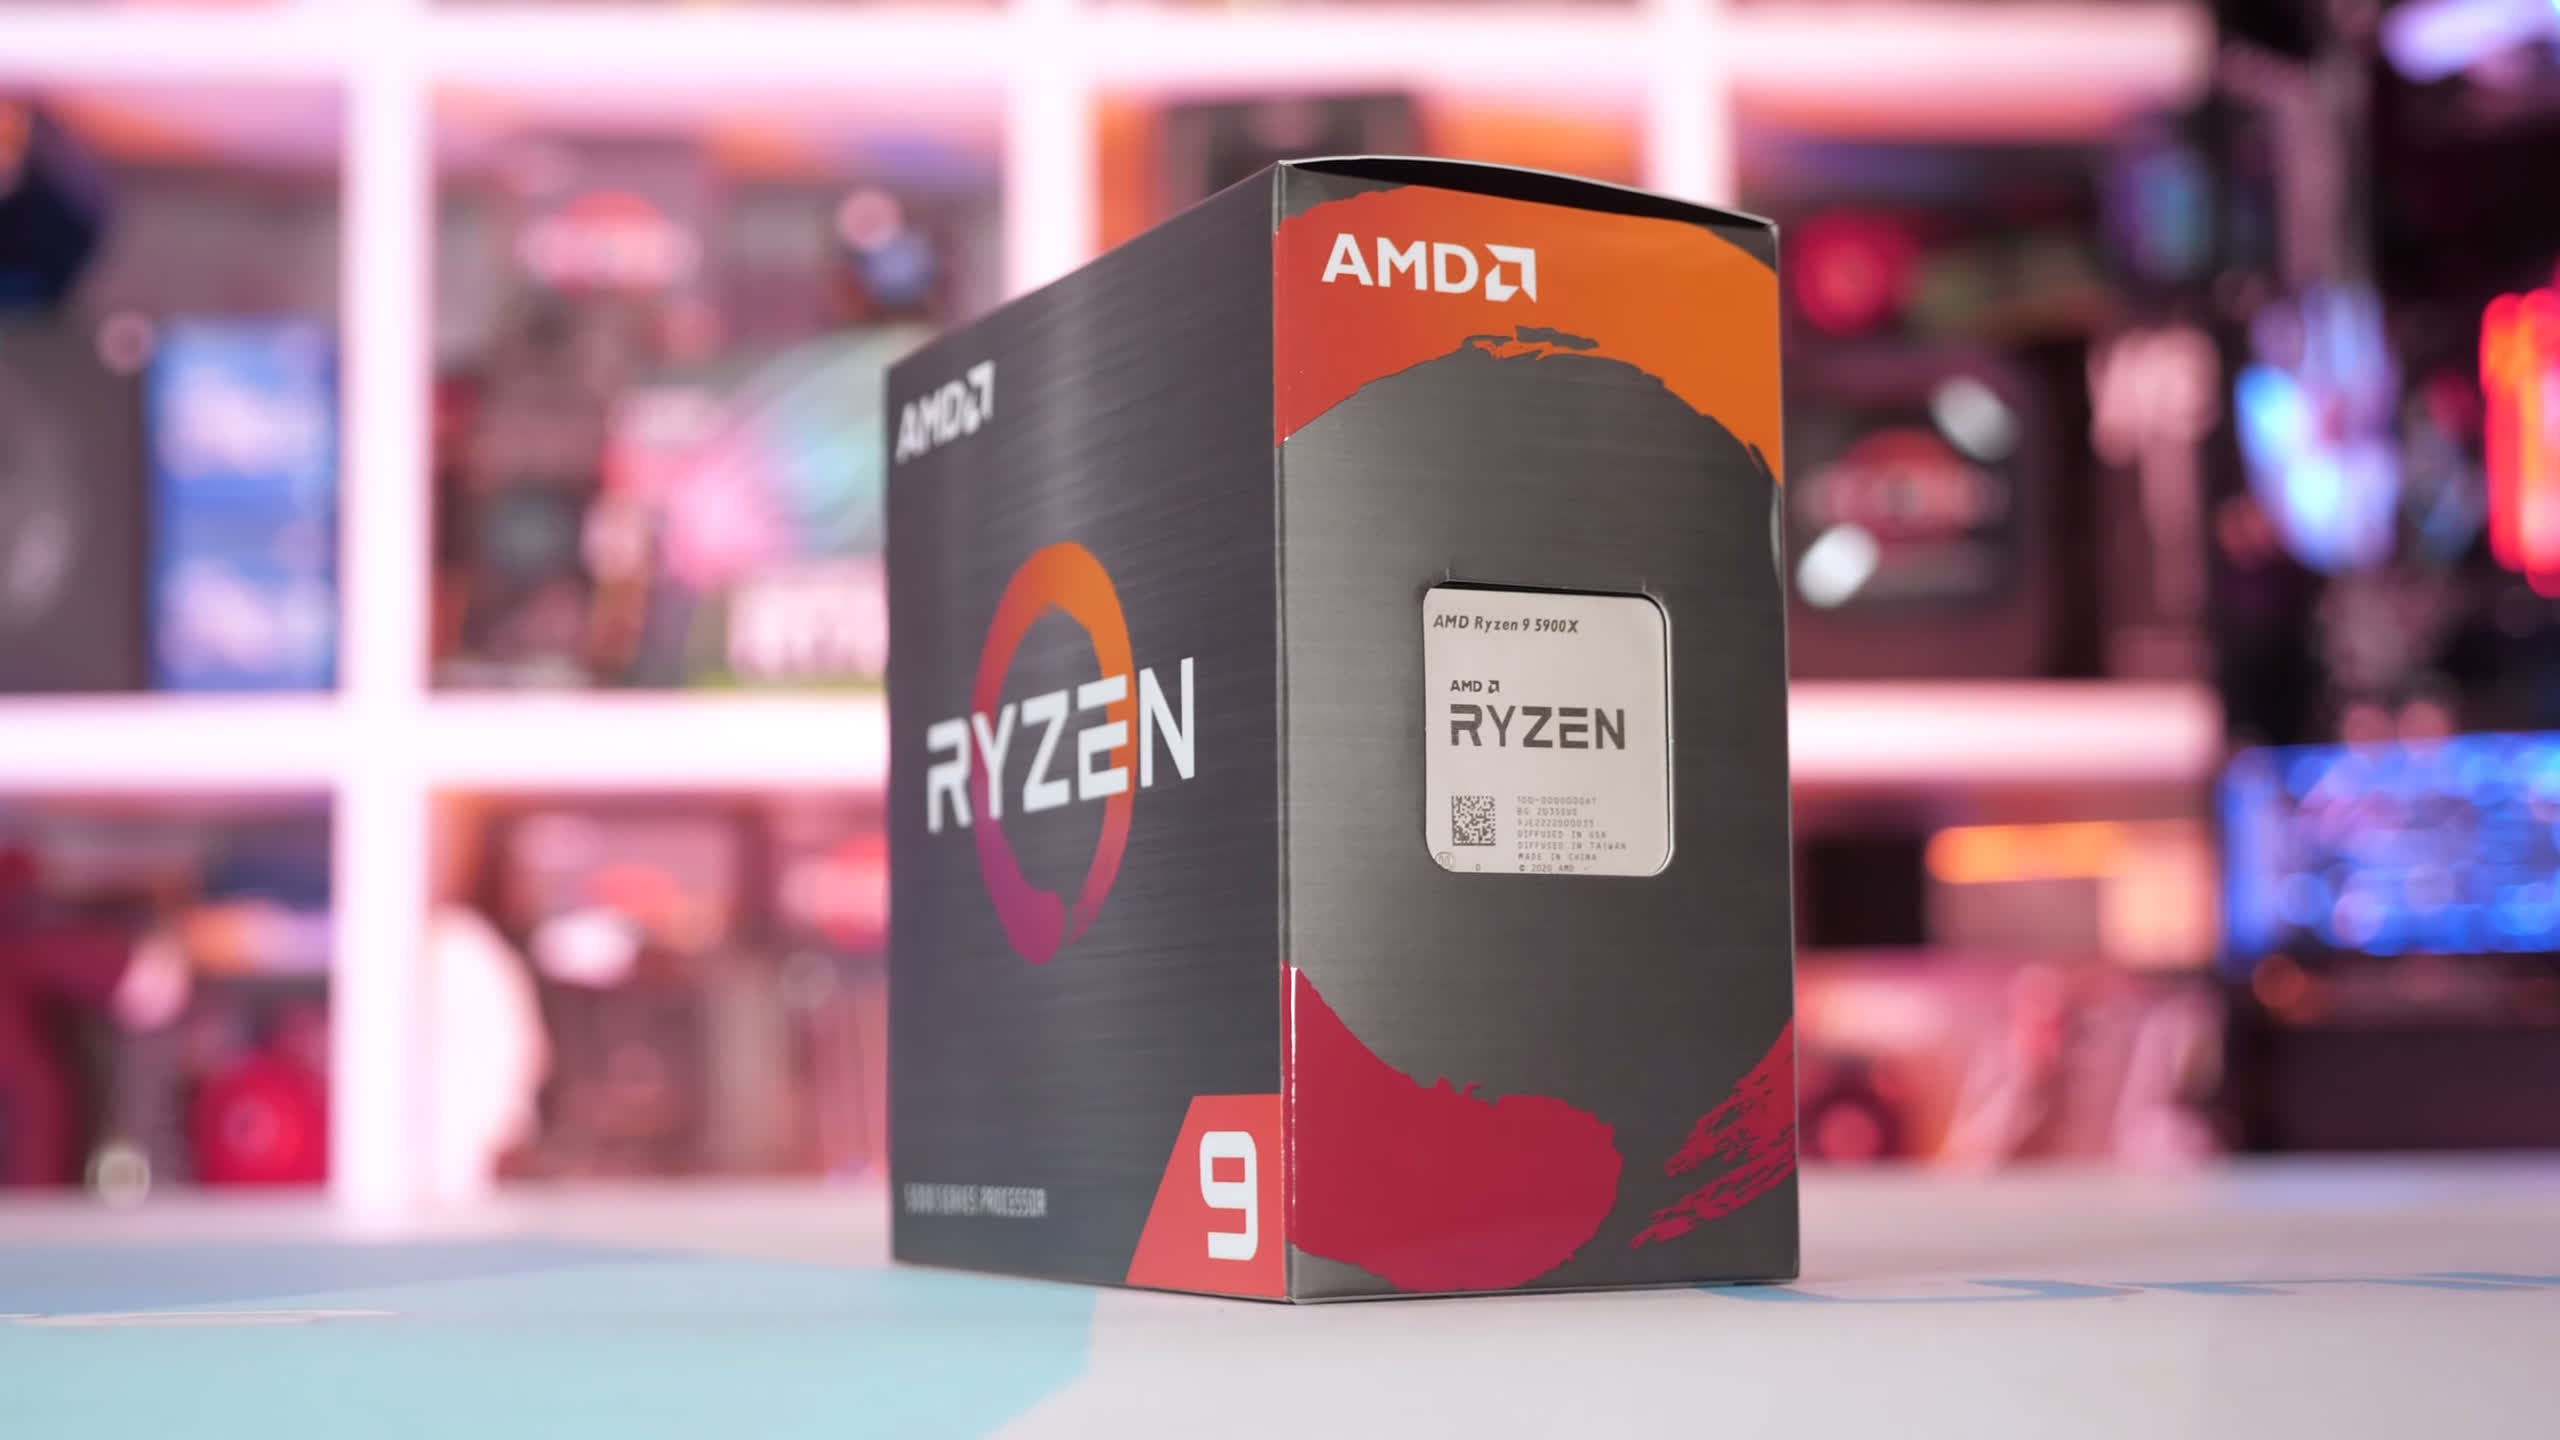 6. AMD Ryzen 9 5900X